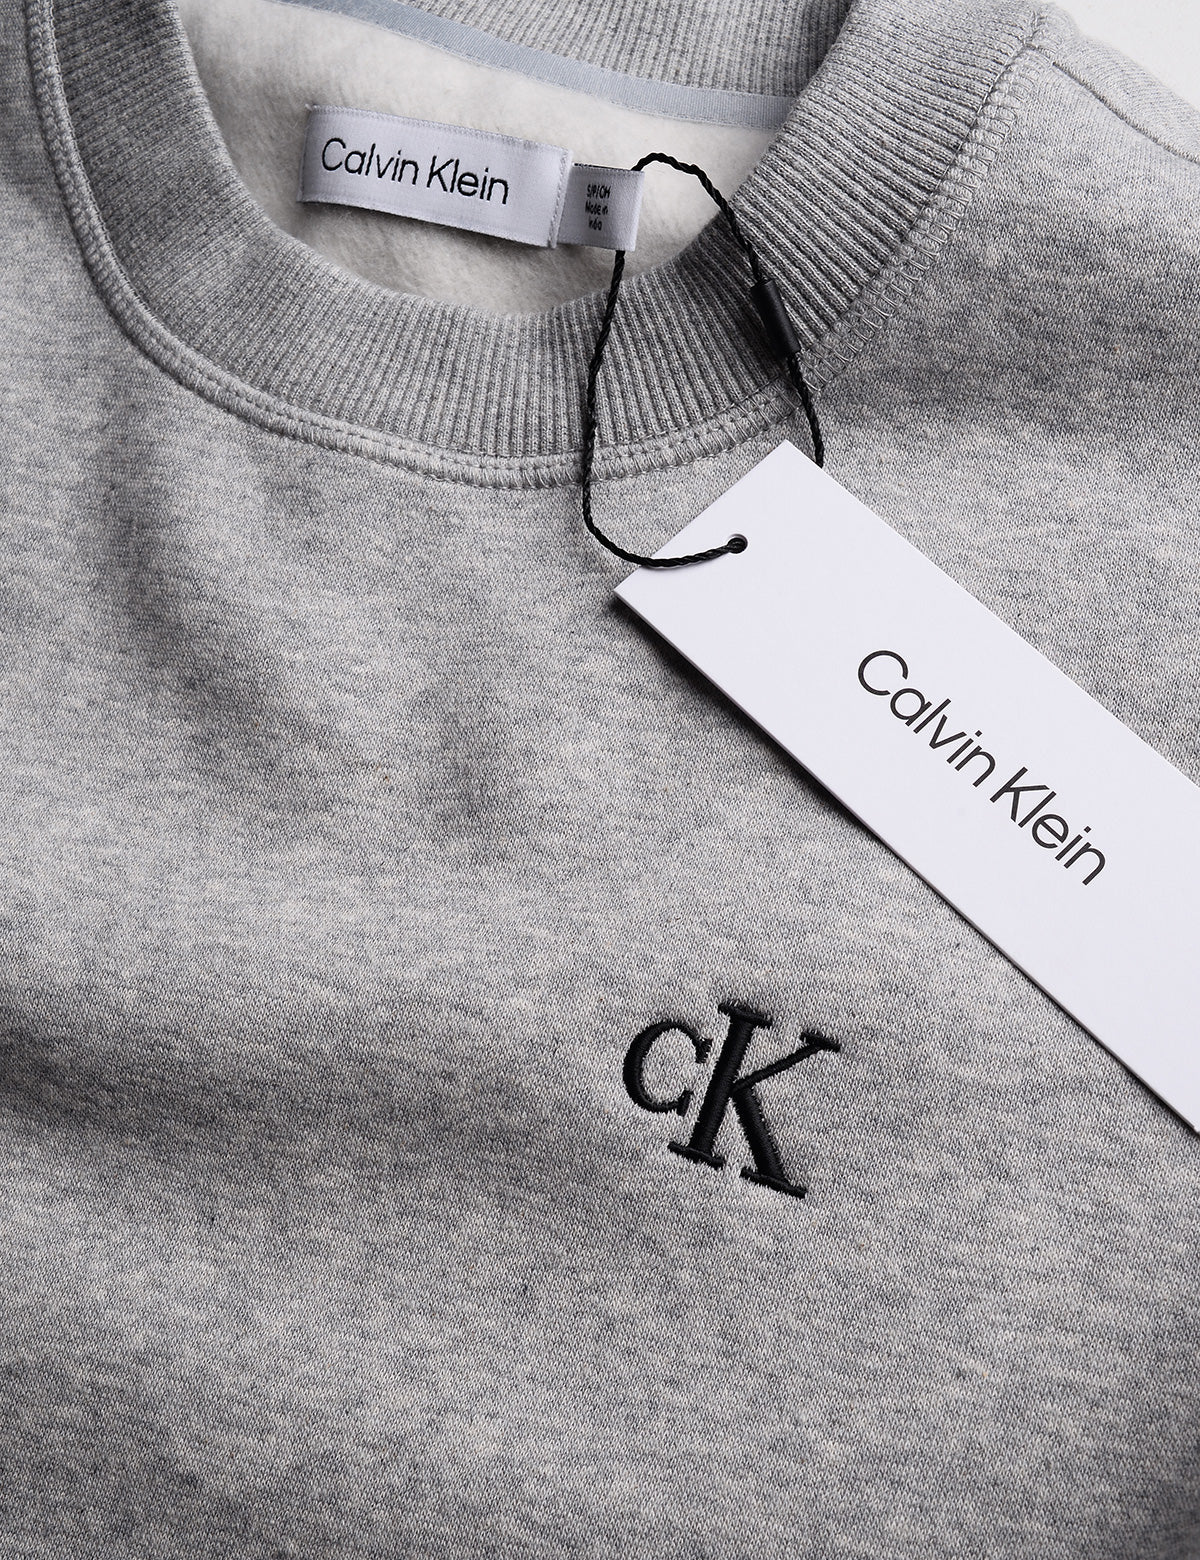 Detail of Calvin Klein Archive Logo Fleece Crewneck - Heroic Heather Gray showing logo, neck, and tag